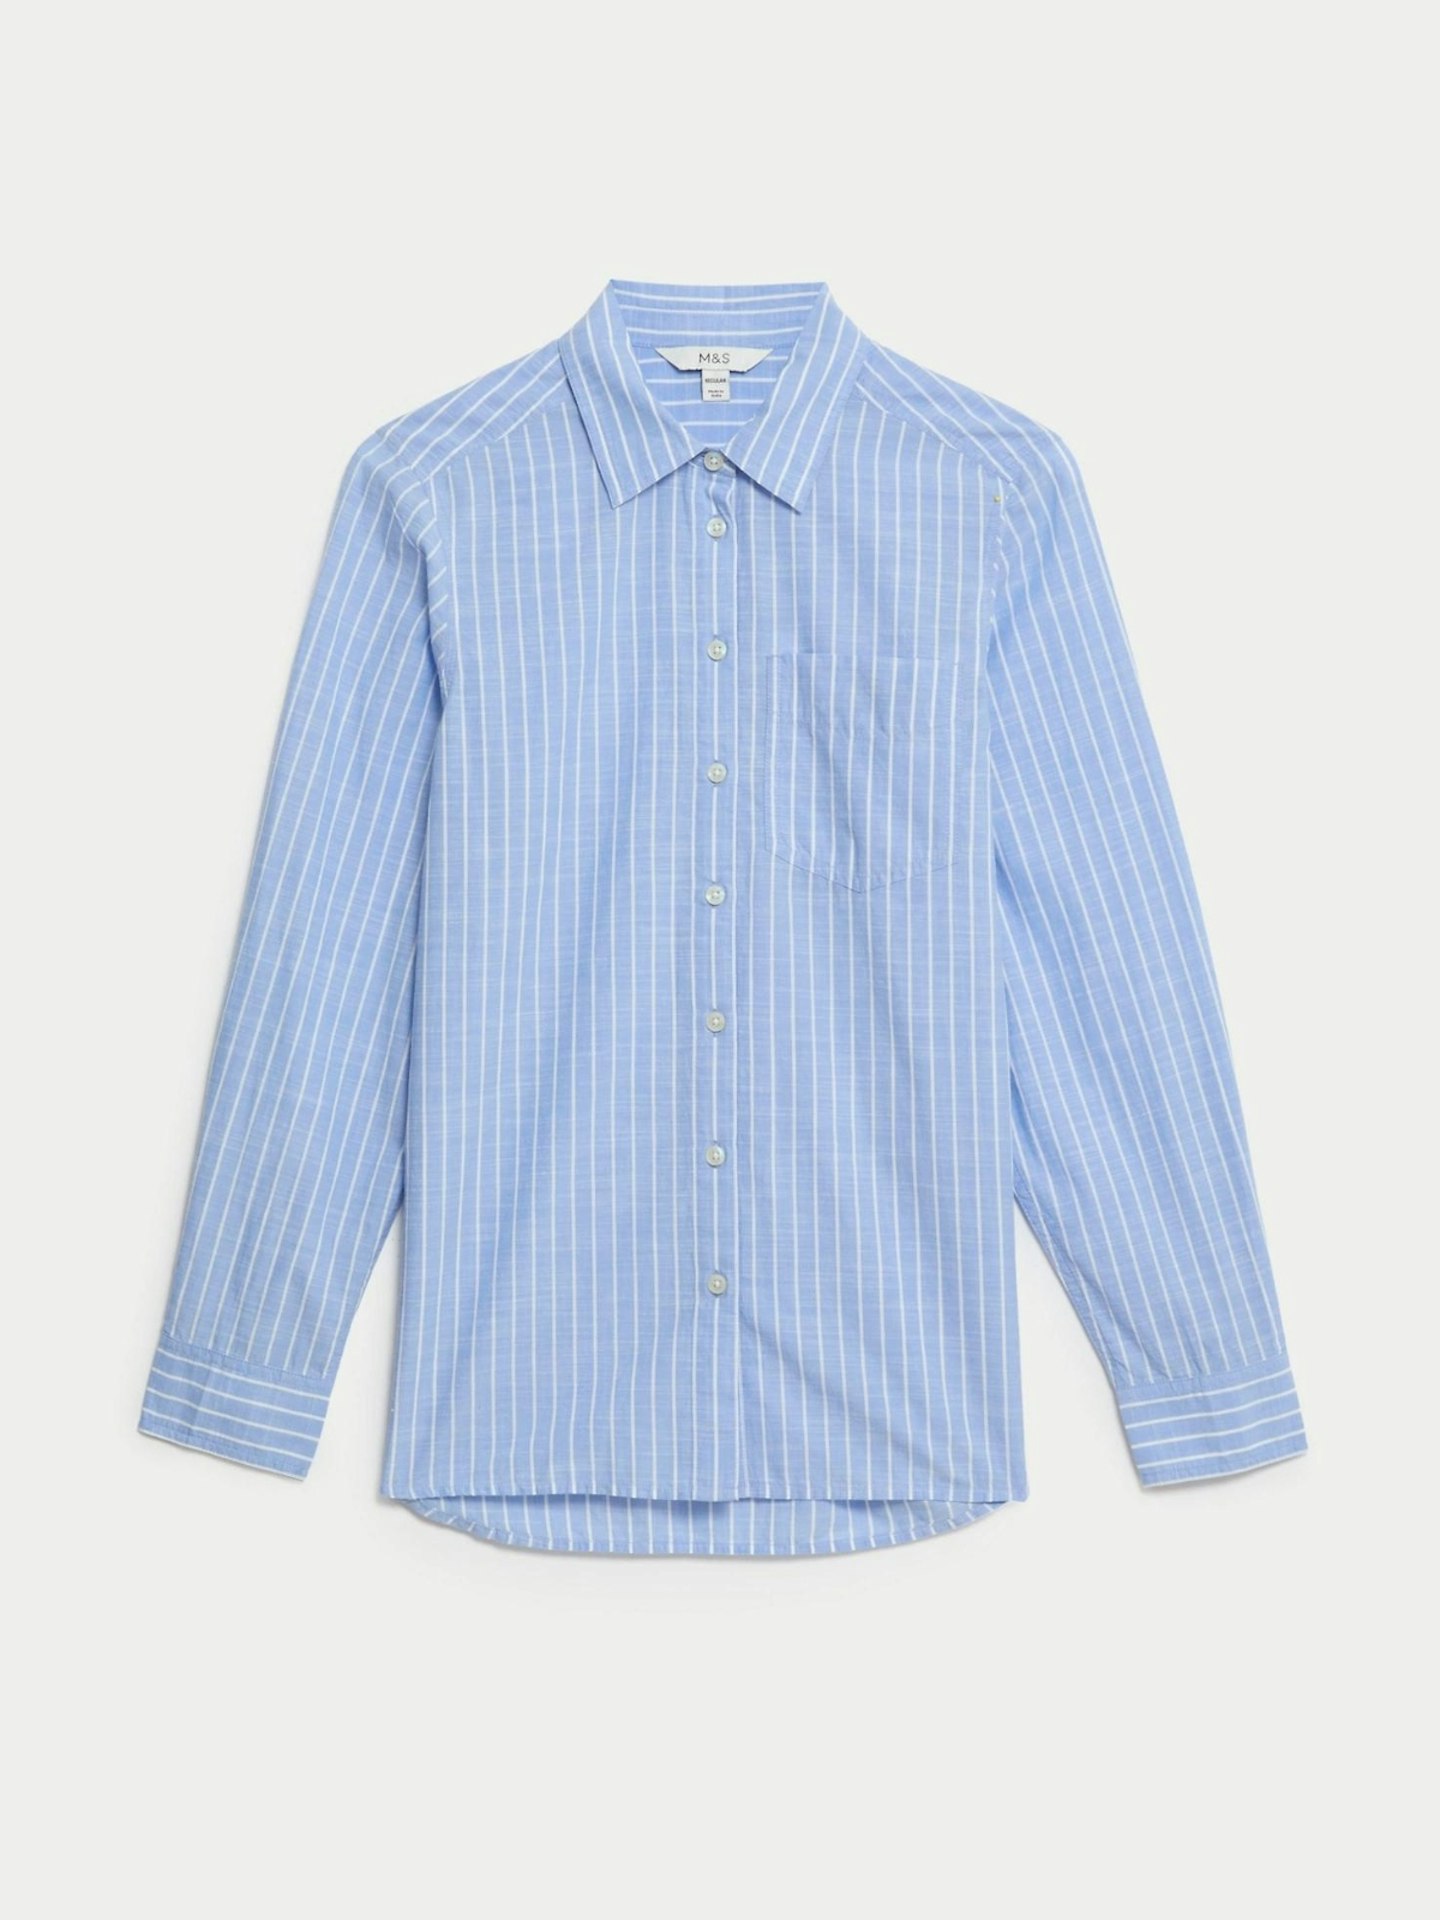 M&S Pure Cotton Striped Shirt